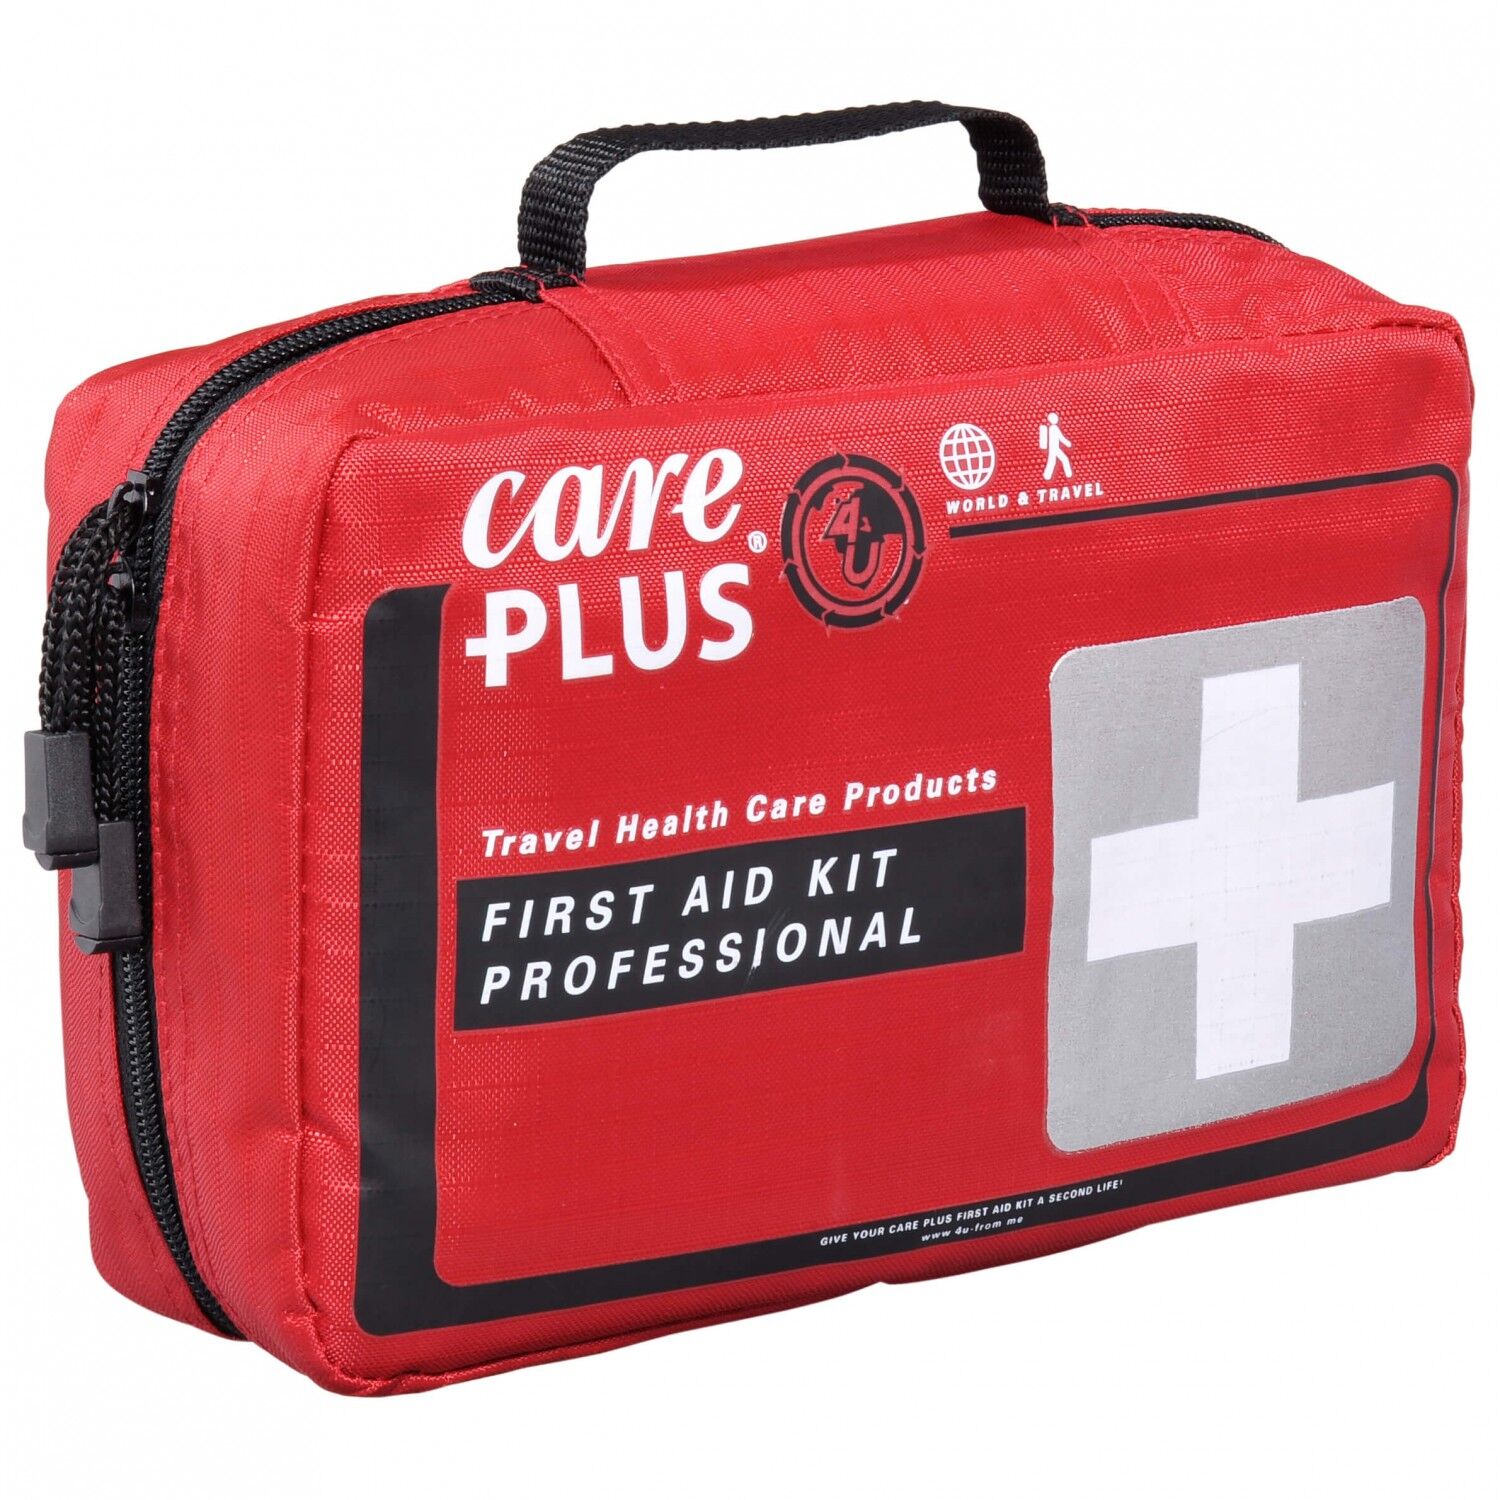 Care Plus First Aid Kit - Professional - Apteczka turystyczna | Hardloop